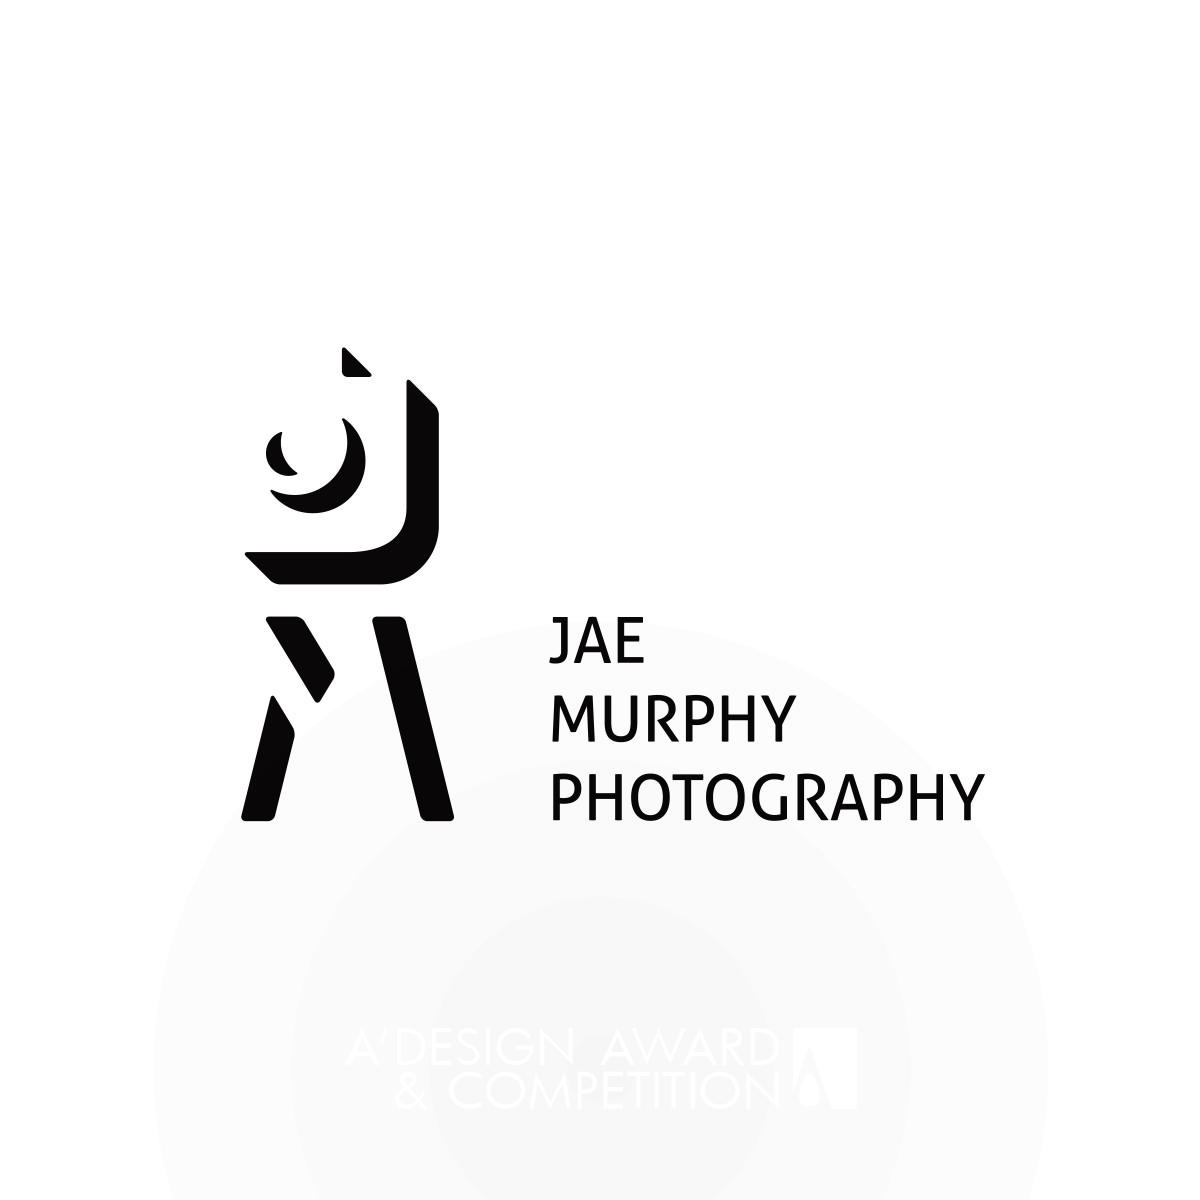 Jae Murphy